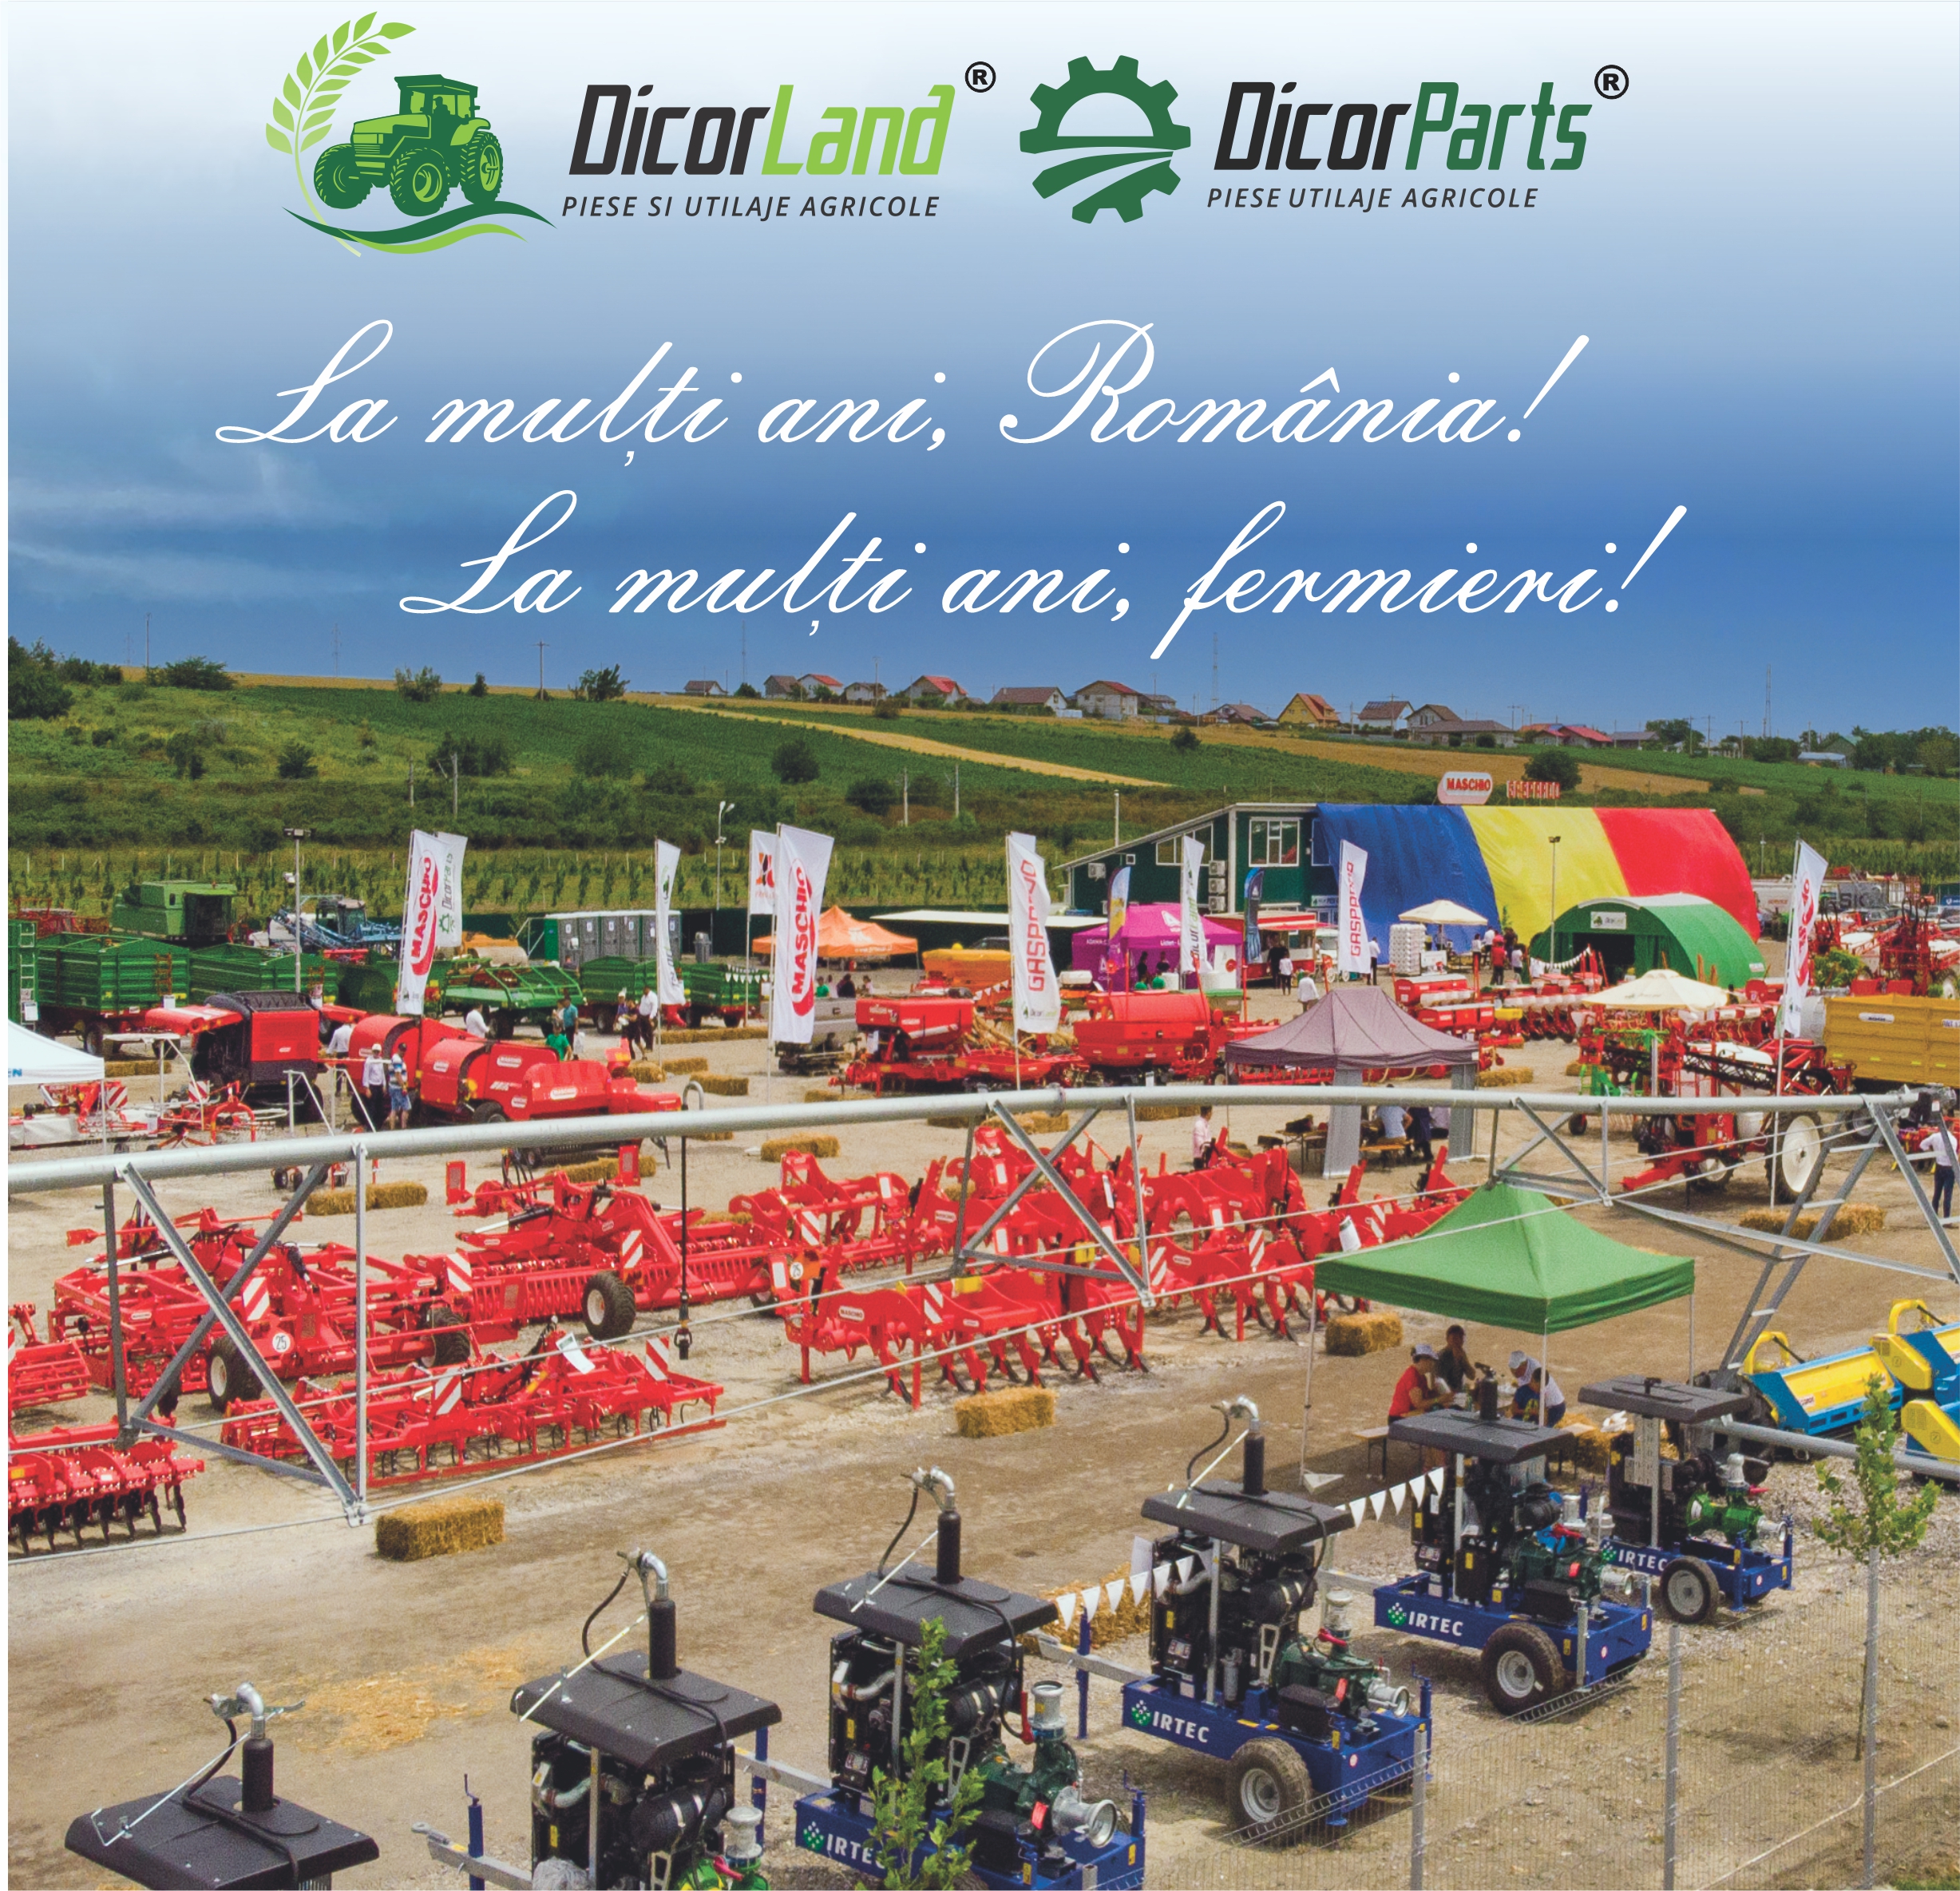 La mulți ani, România! La mulți ani, fermieri! din partea Dicor Land - La mulți ani, România! La mulți ani, fermieri! din partea Dicor Land - Dicorland